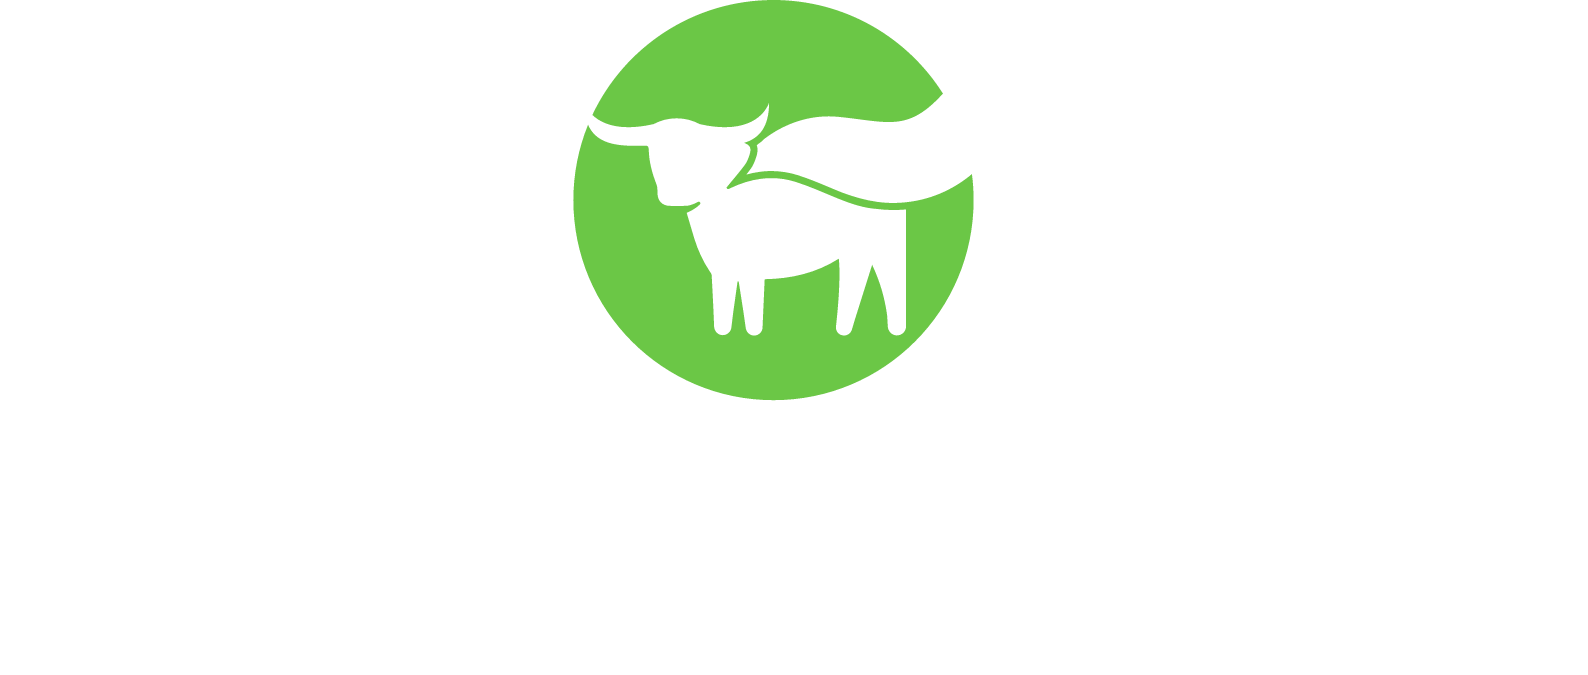 Beyond Meat logo large for dark backgrounds (transparent PNG)